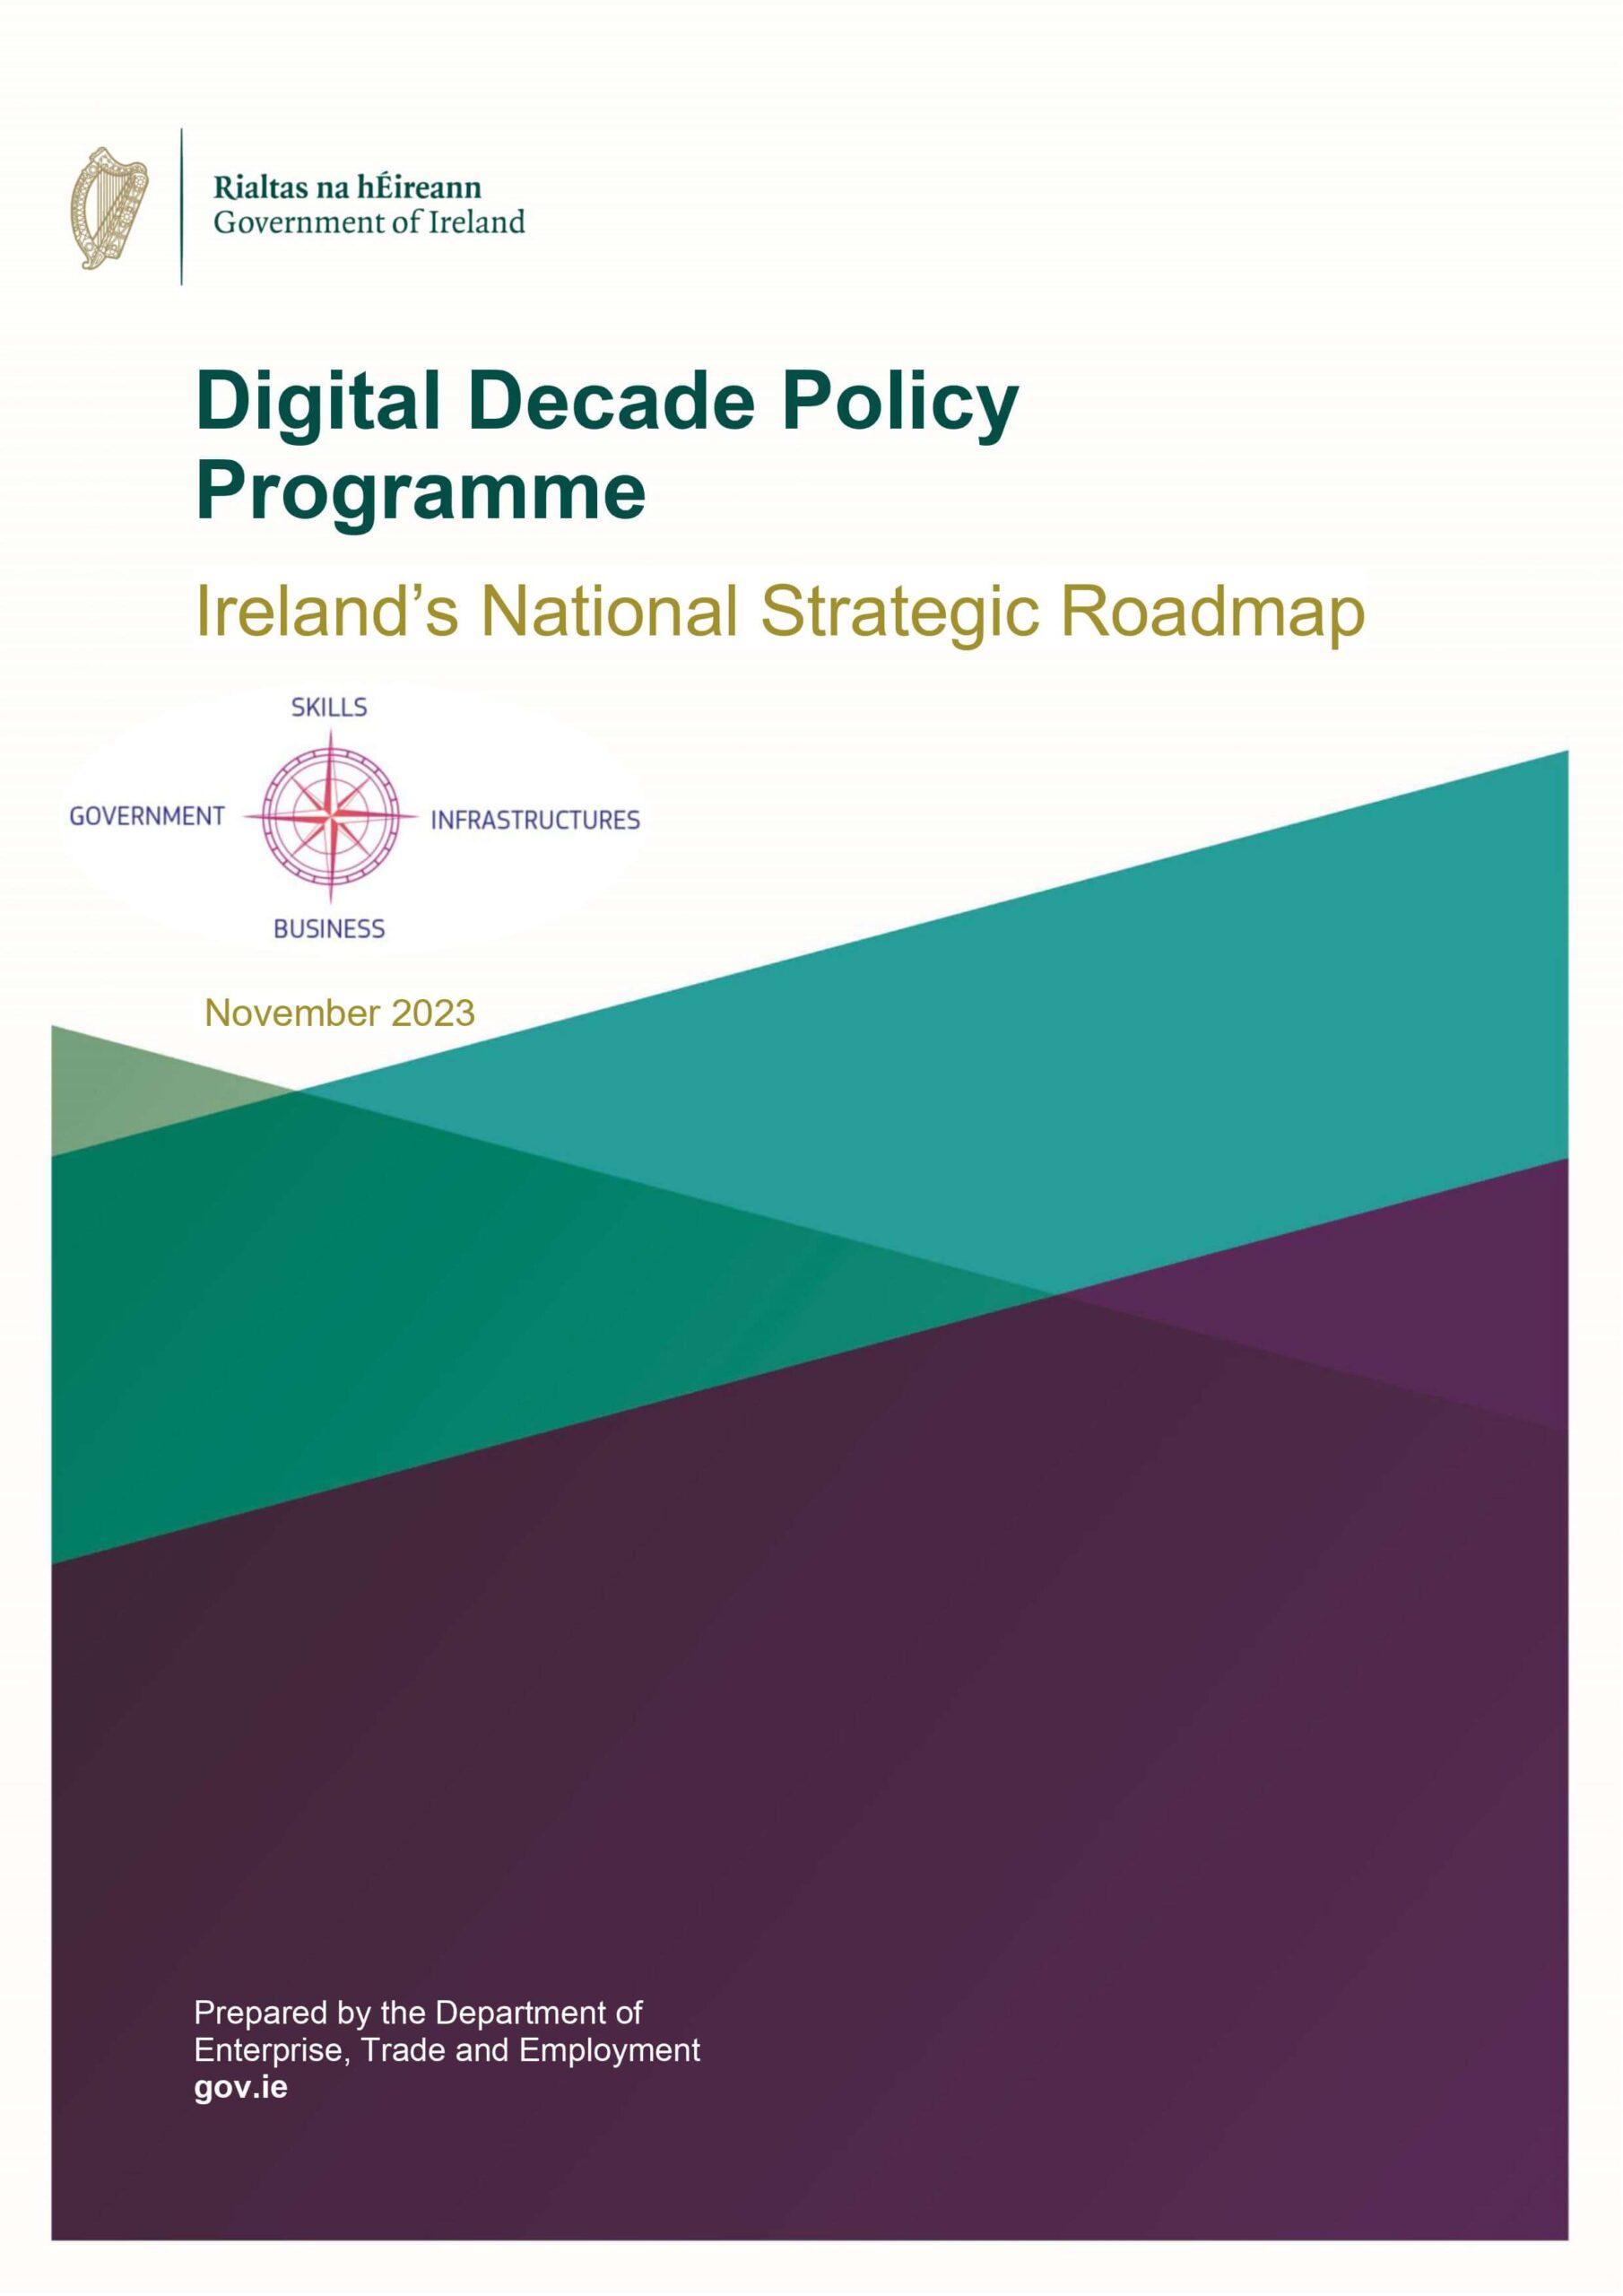 Digital Decade Policy Programme – National Strategic Roadmap